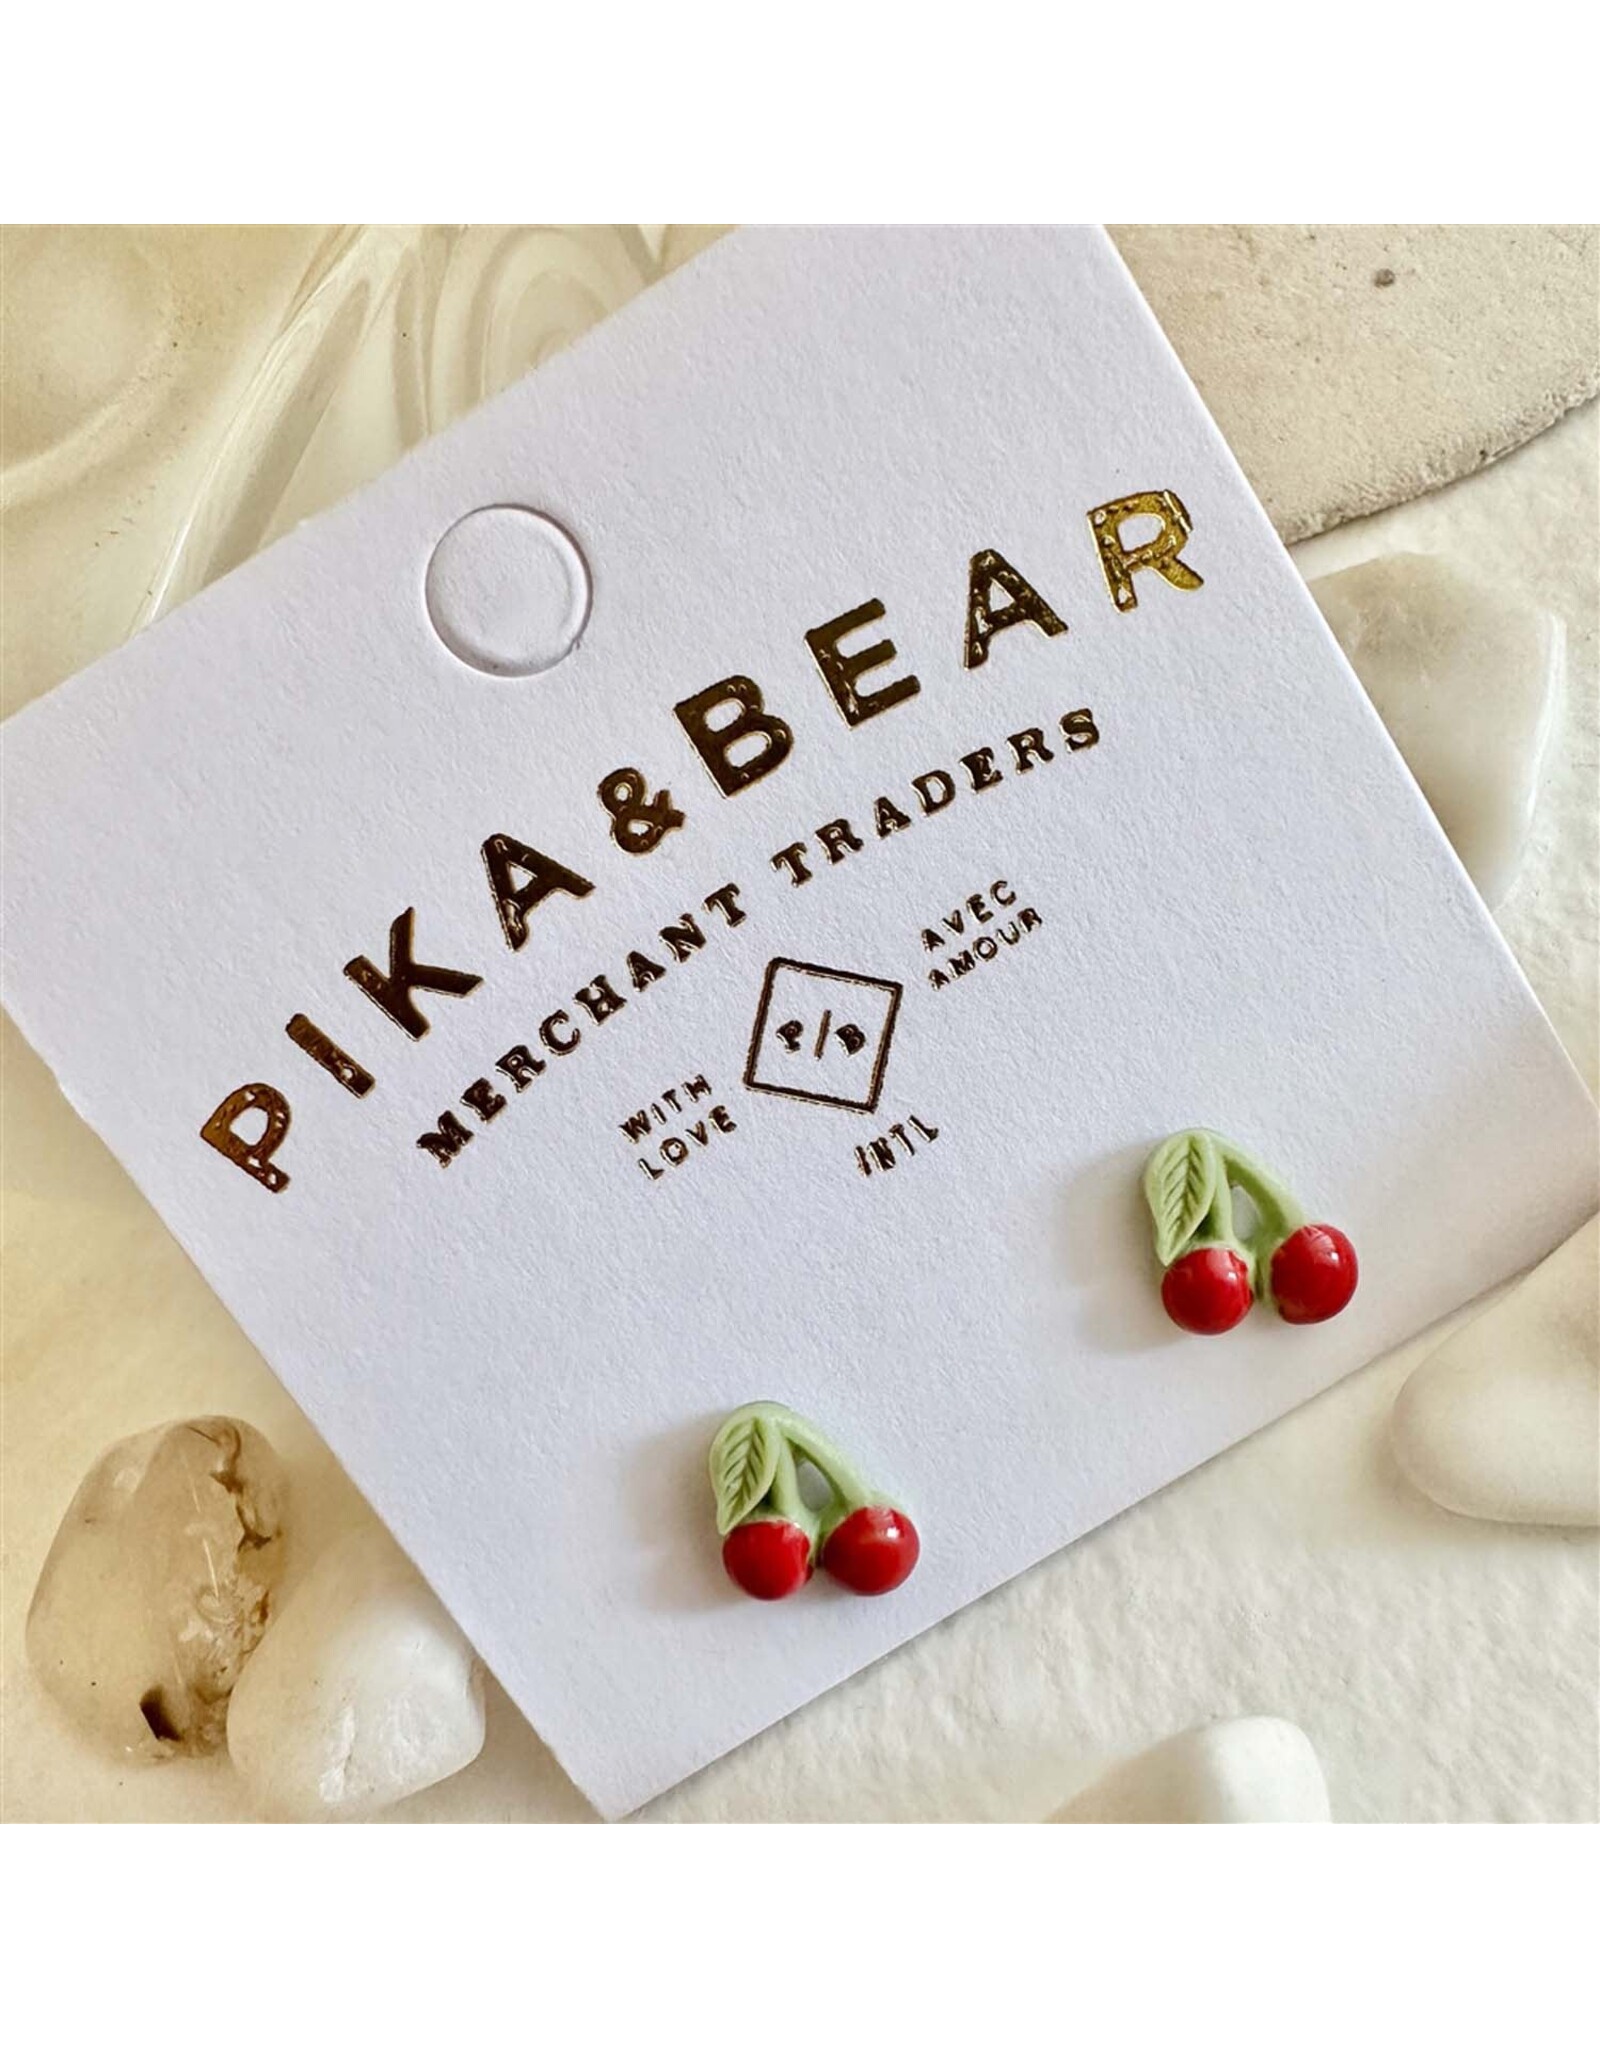 Pika & Bear Pika & Bear - Pomona Porcelain Cherry Stud Earrings